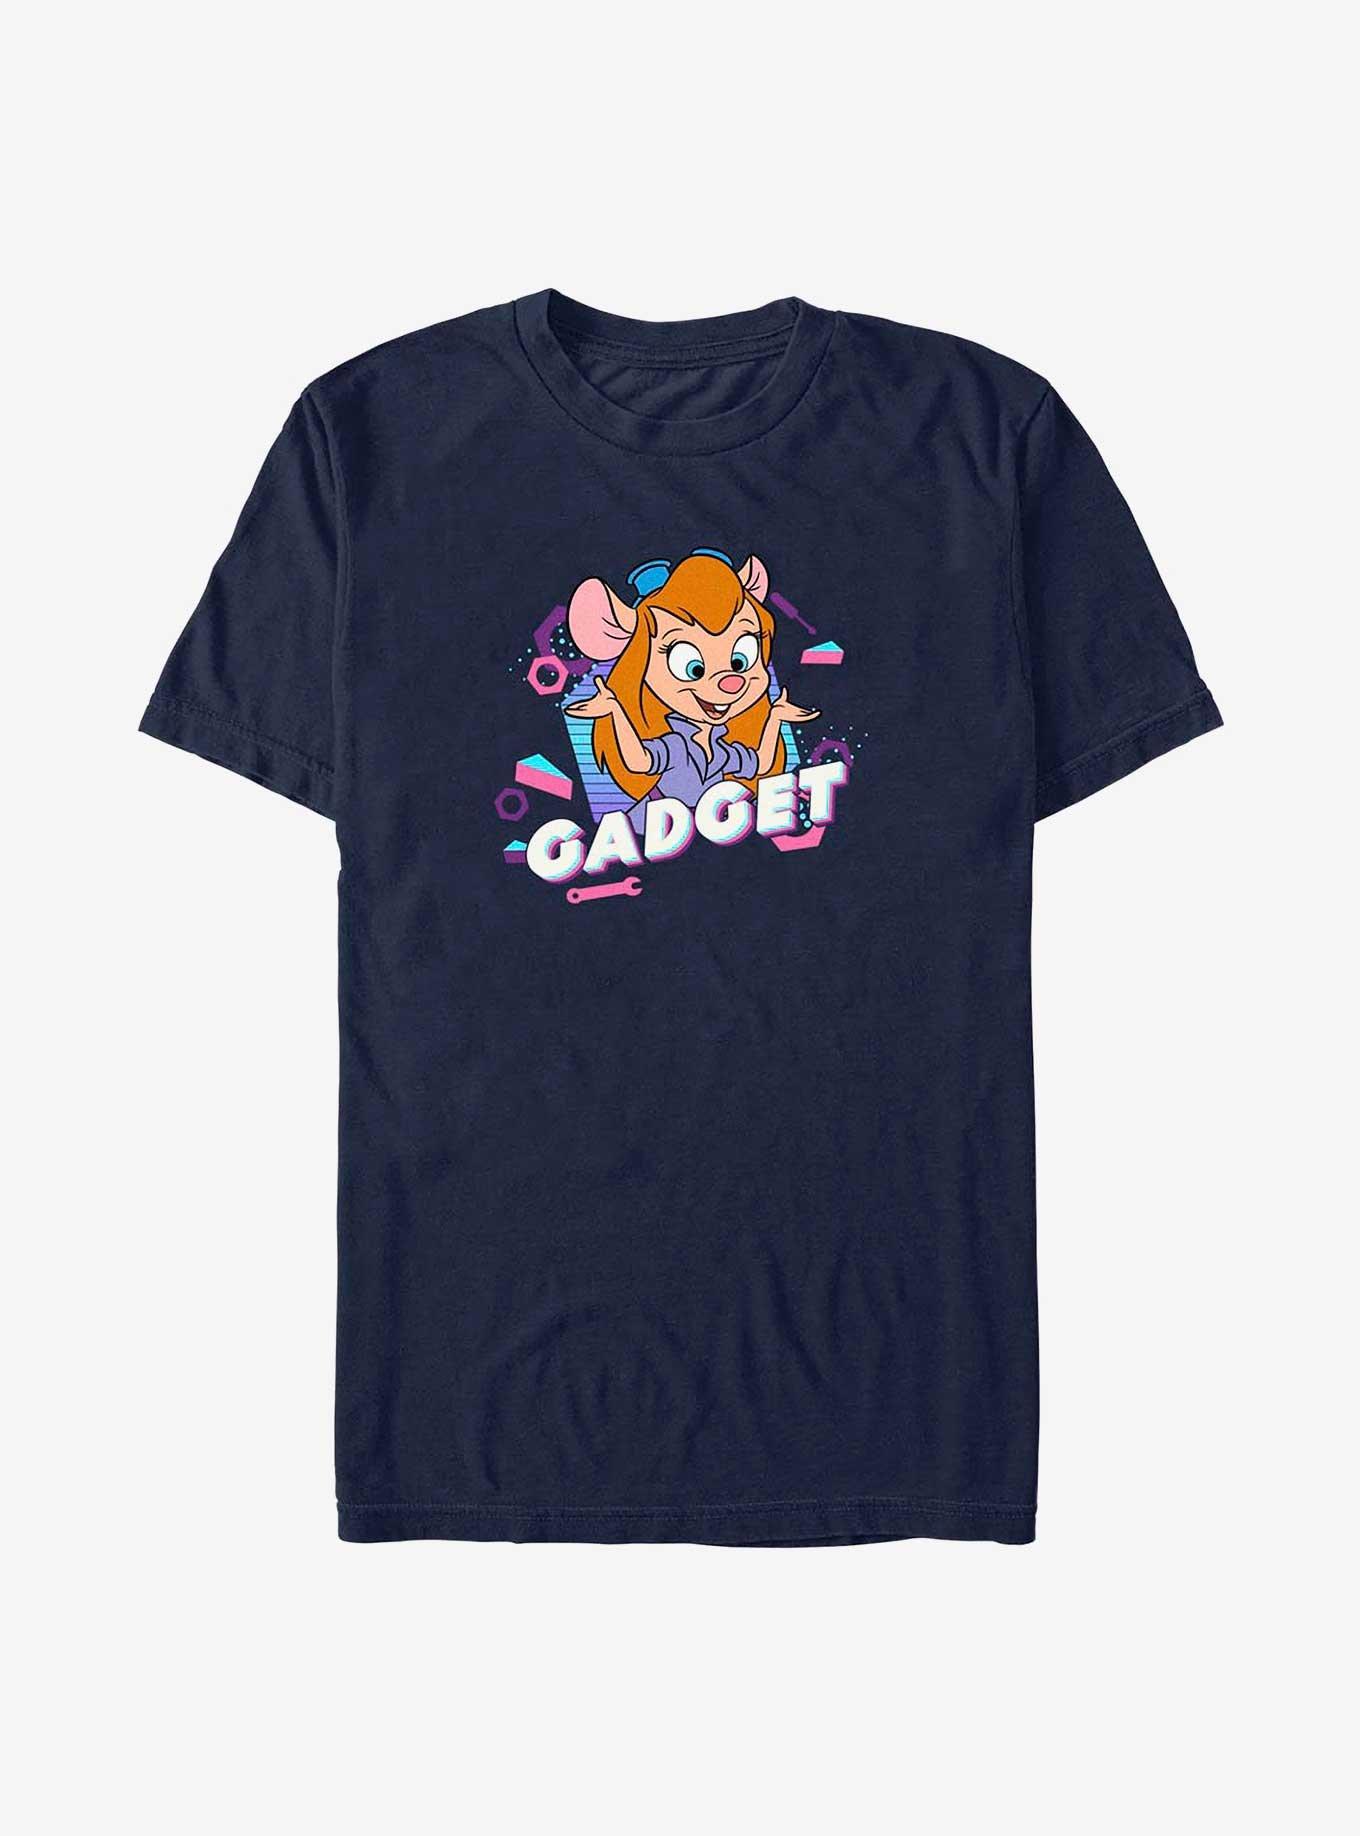 Disney Chip 'n Dale Gadget T-Shirt, NAVY, hi-res